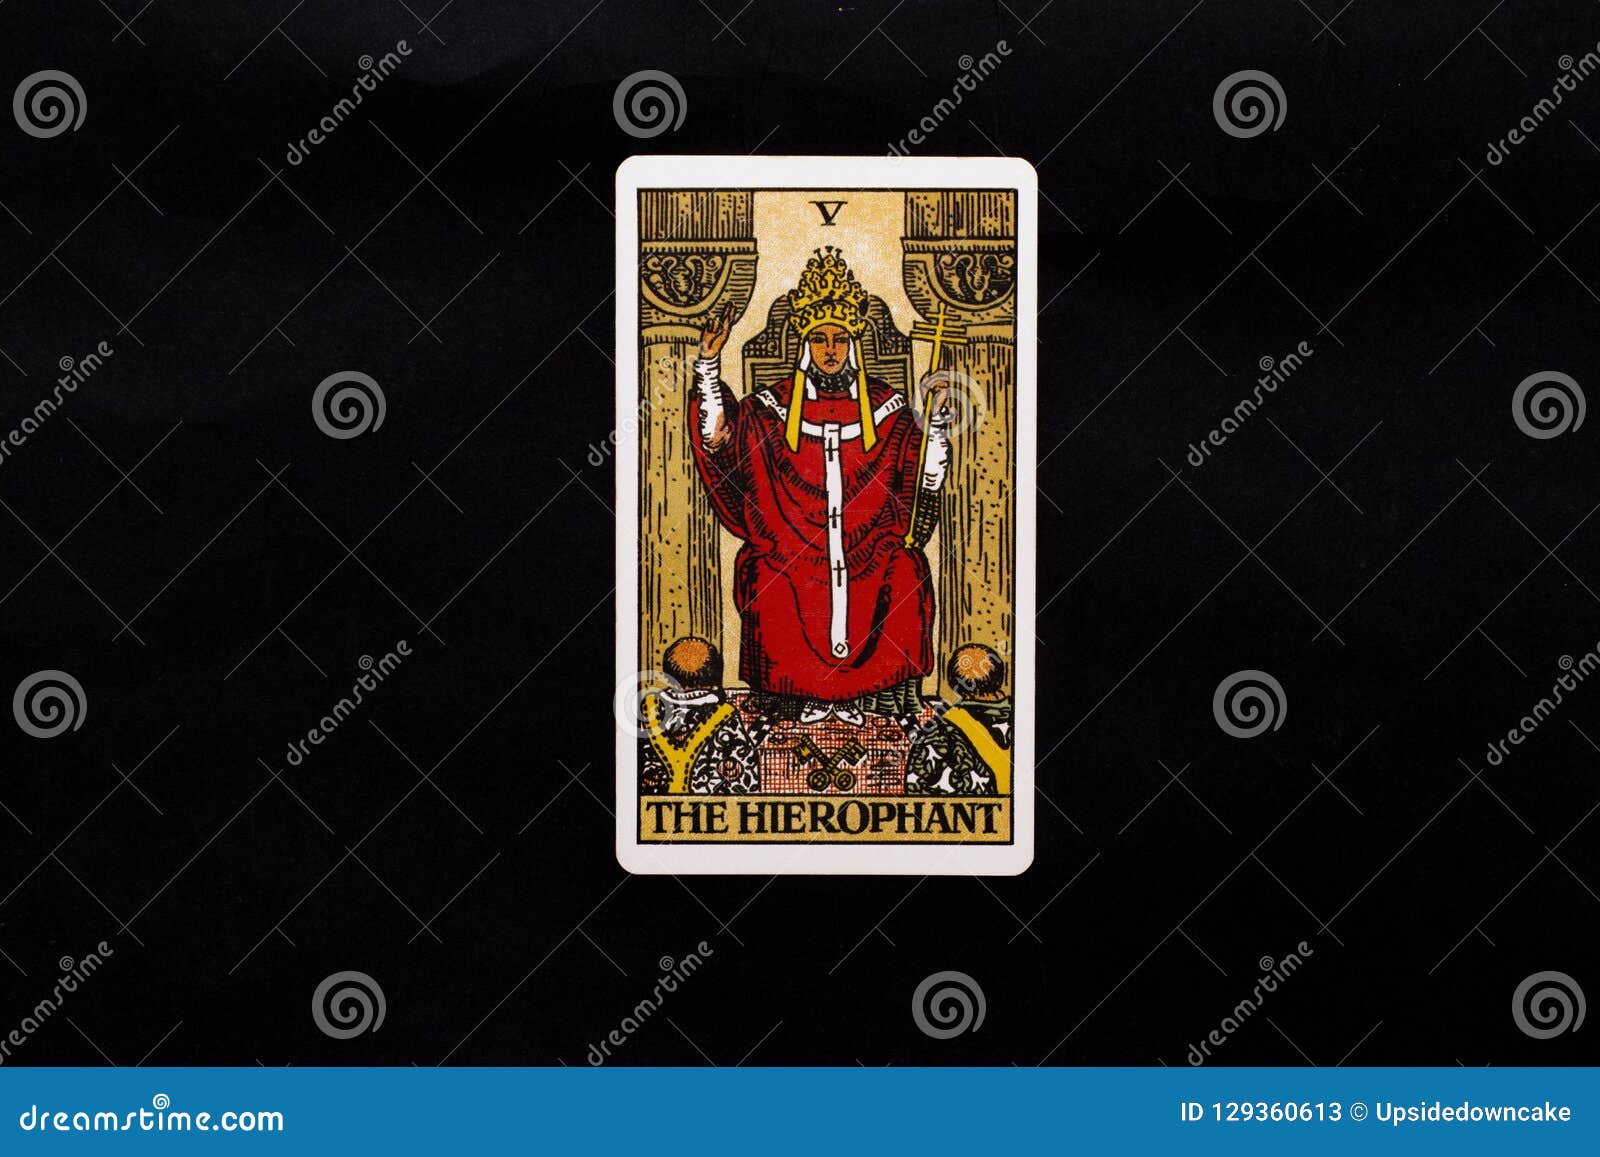 the hierophant major arcana tarot card